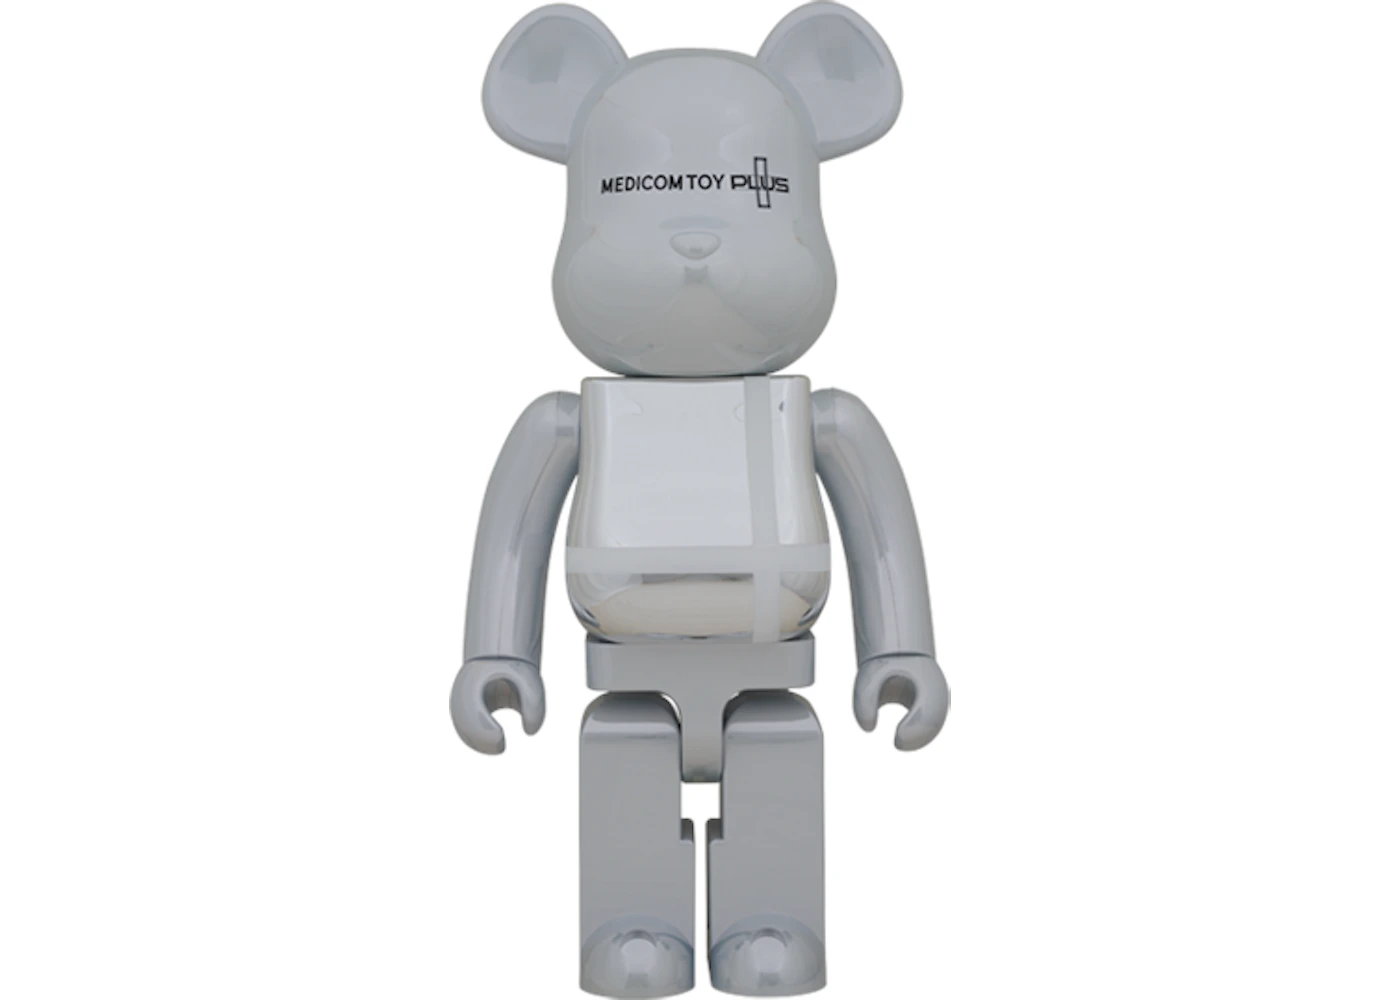 Bearbrick Medicom Toy Plus 1000% White Chrome Ver. - SS21